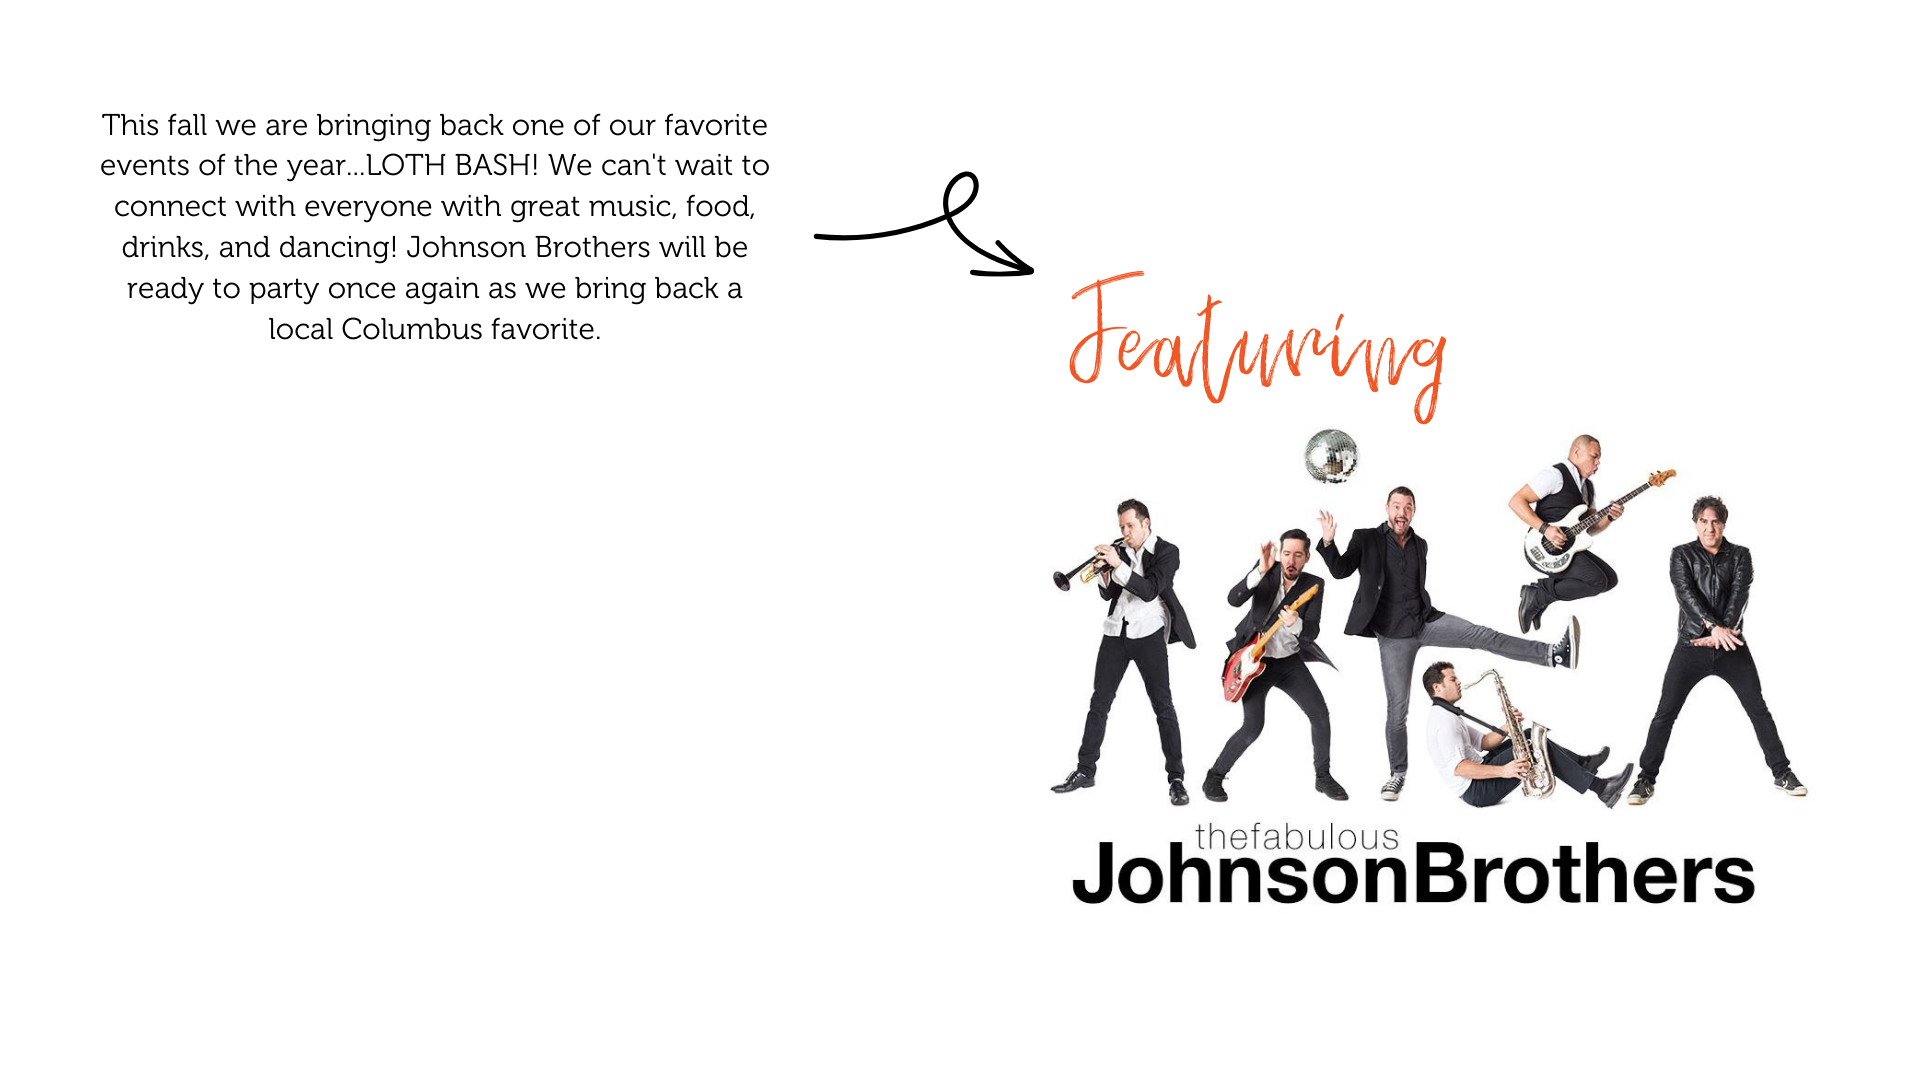 Johnson Brothers promo graphic